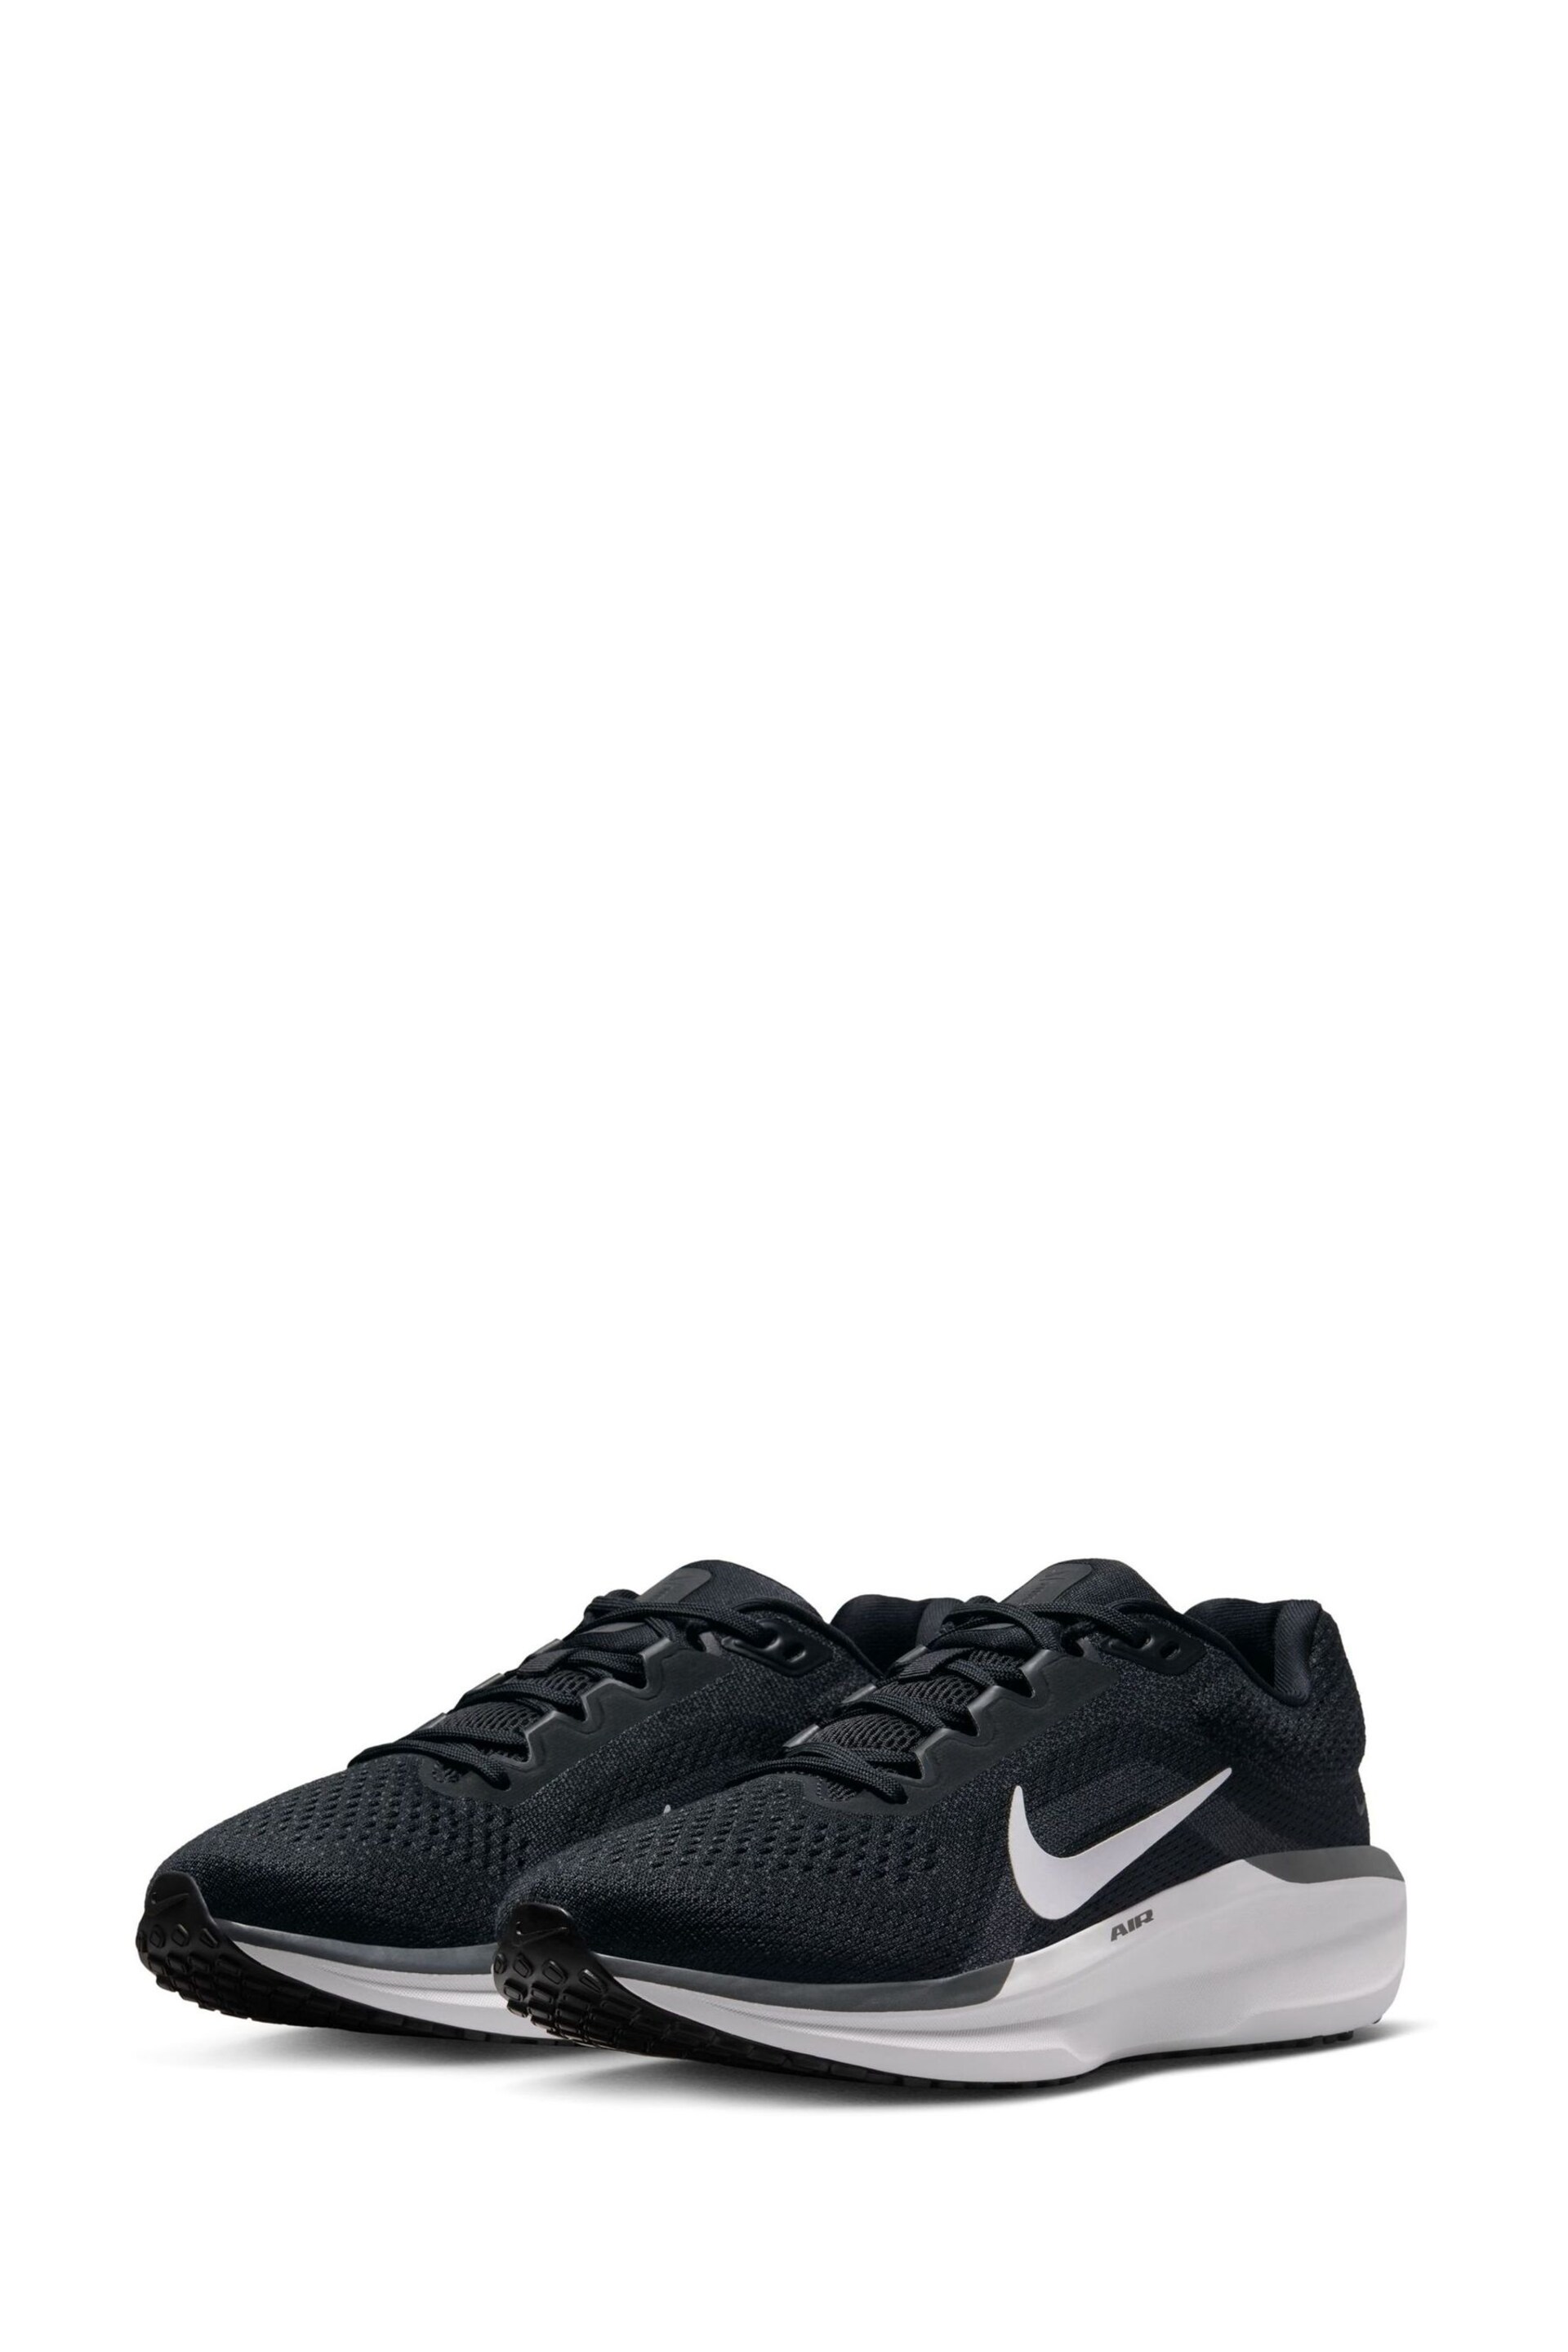 Nike Black/White Winflo 11 Road Running Trainers - Image 5 of 11